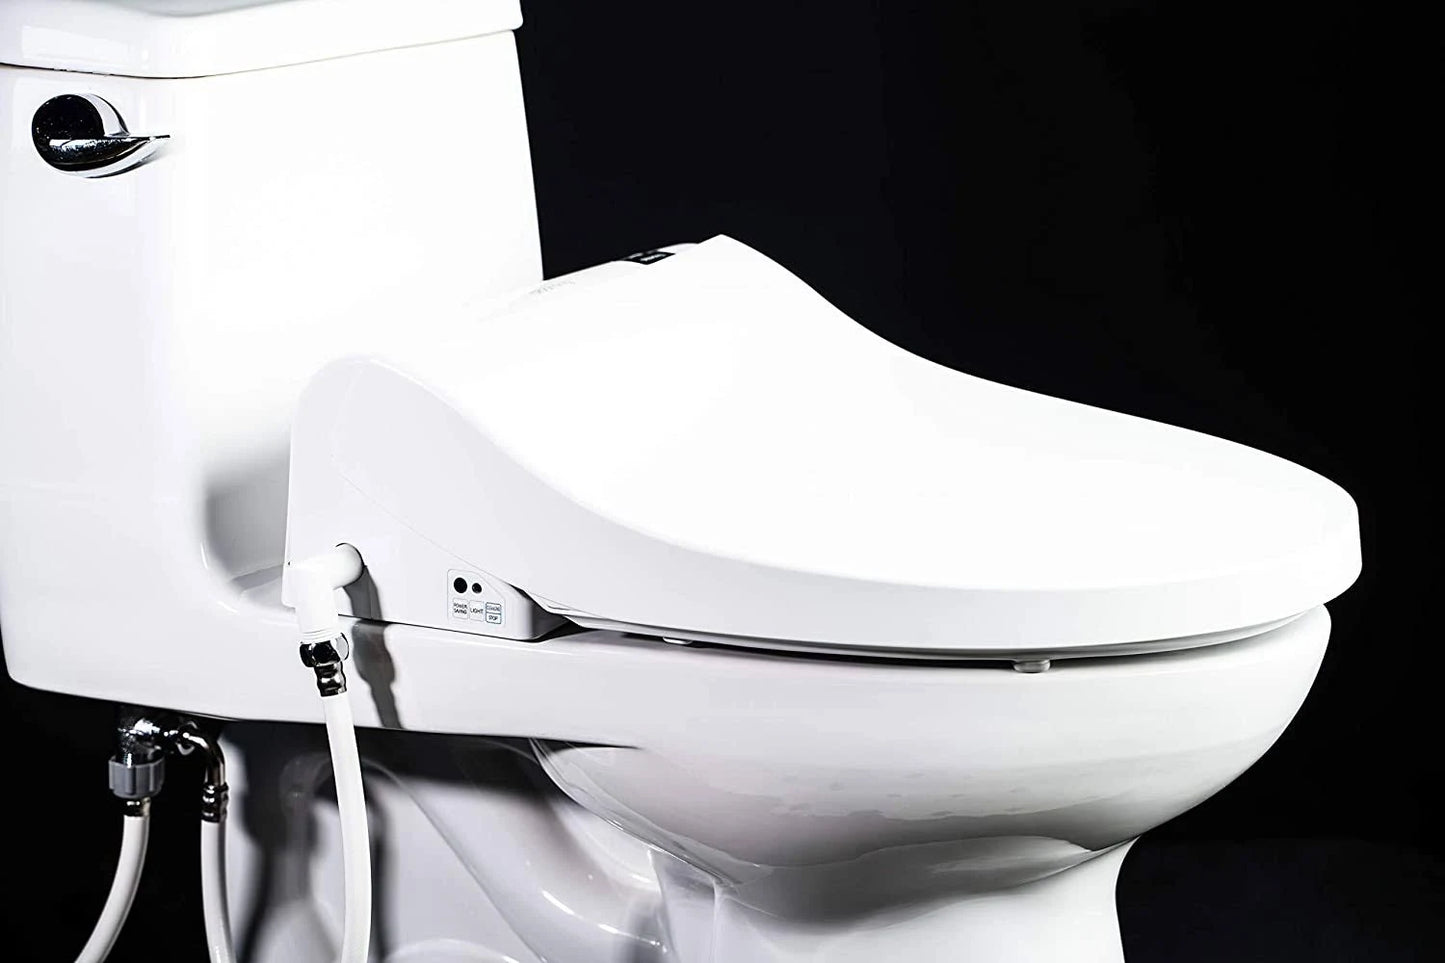 Blooming Bidet R1570 Smart Bidet Toilet Seat